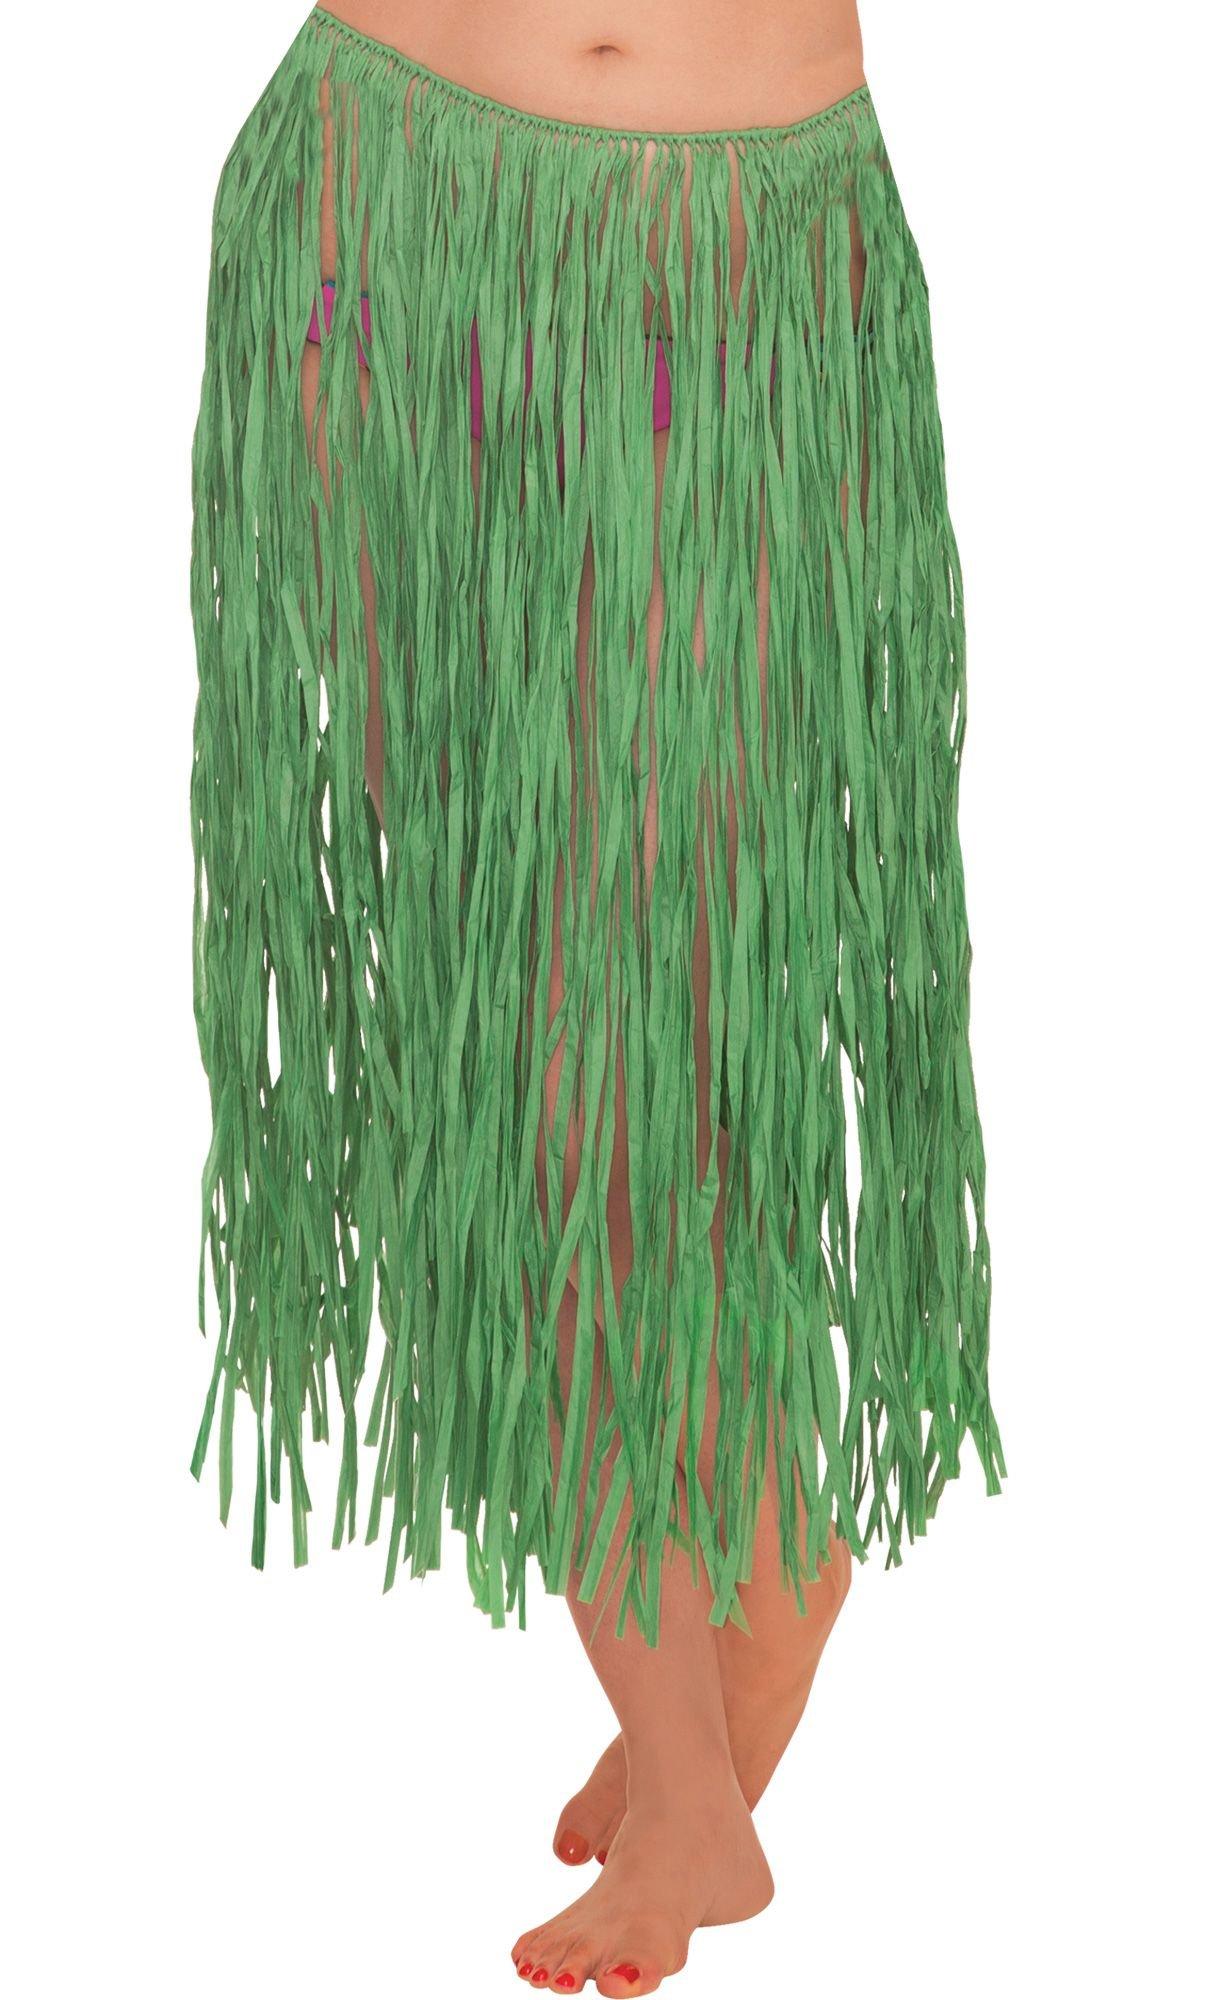 Adult Large Faux Grass Skirt Kit, 5pc